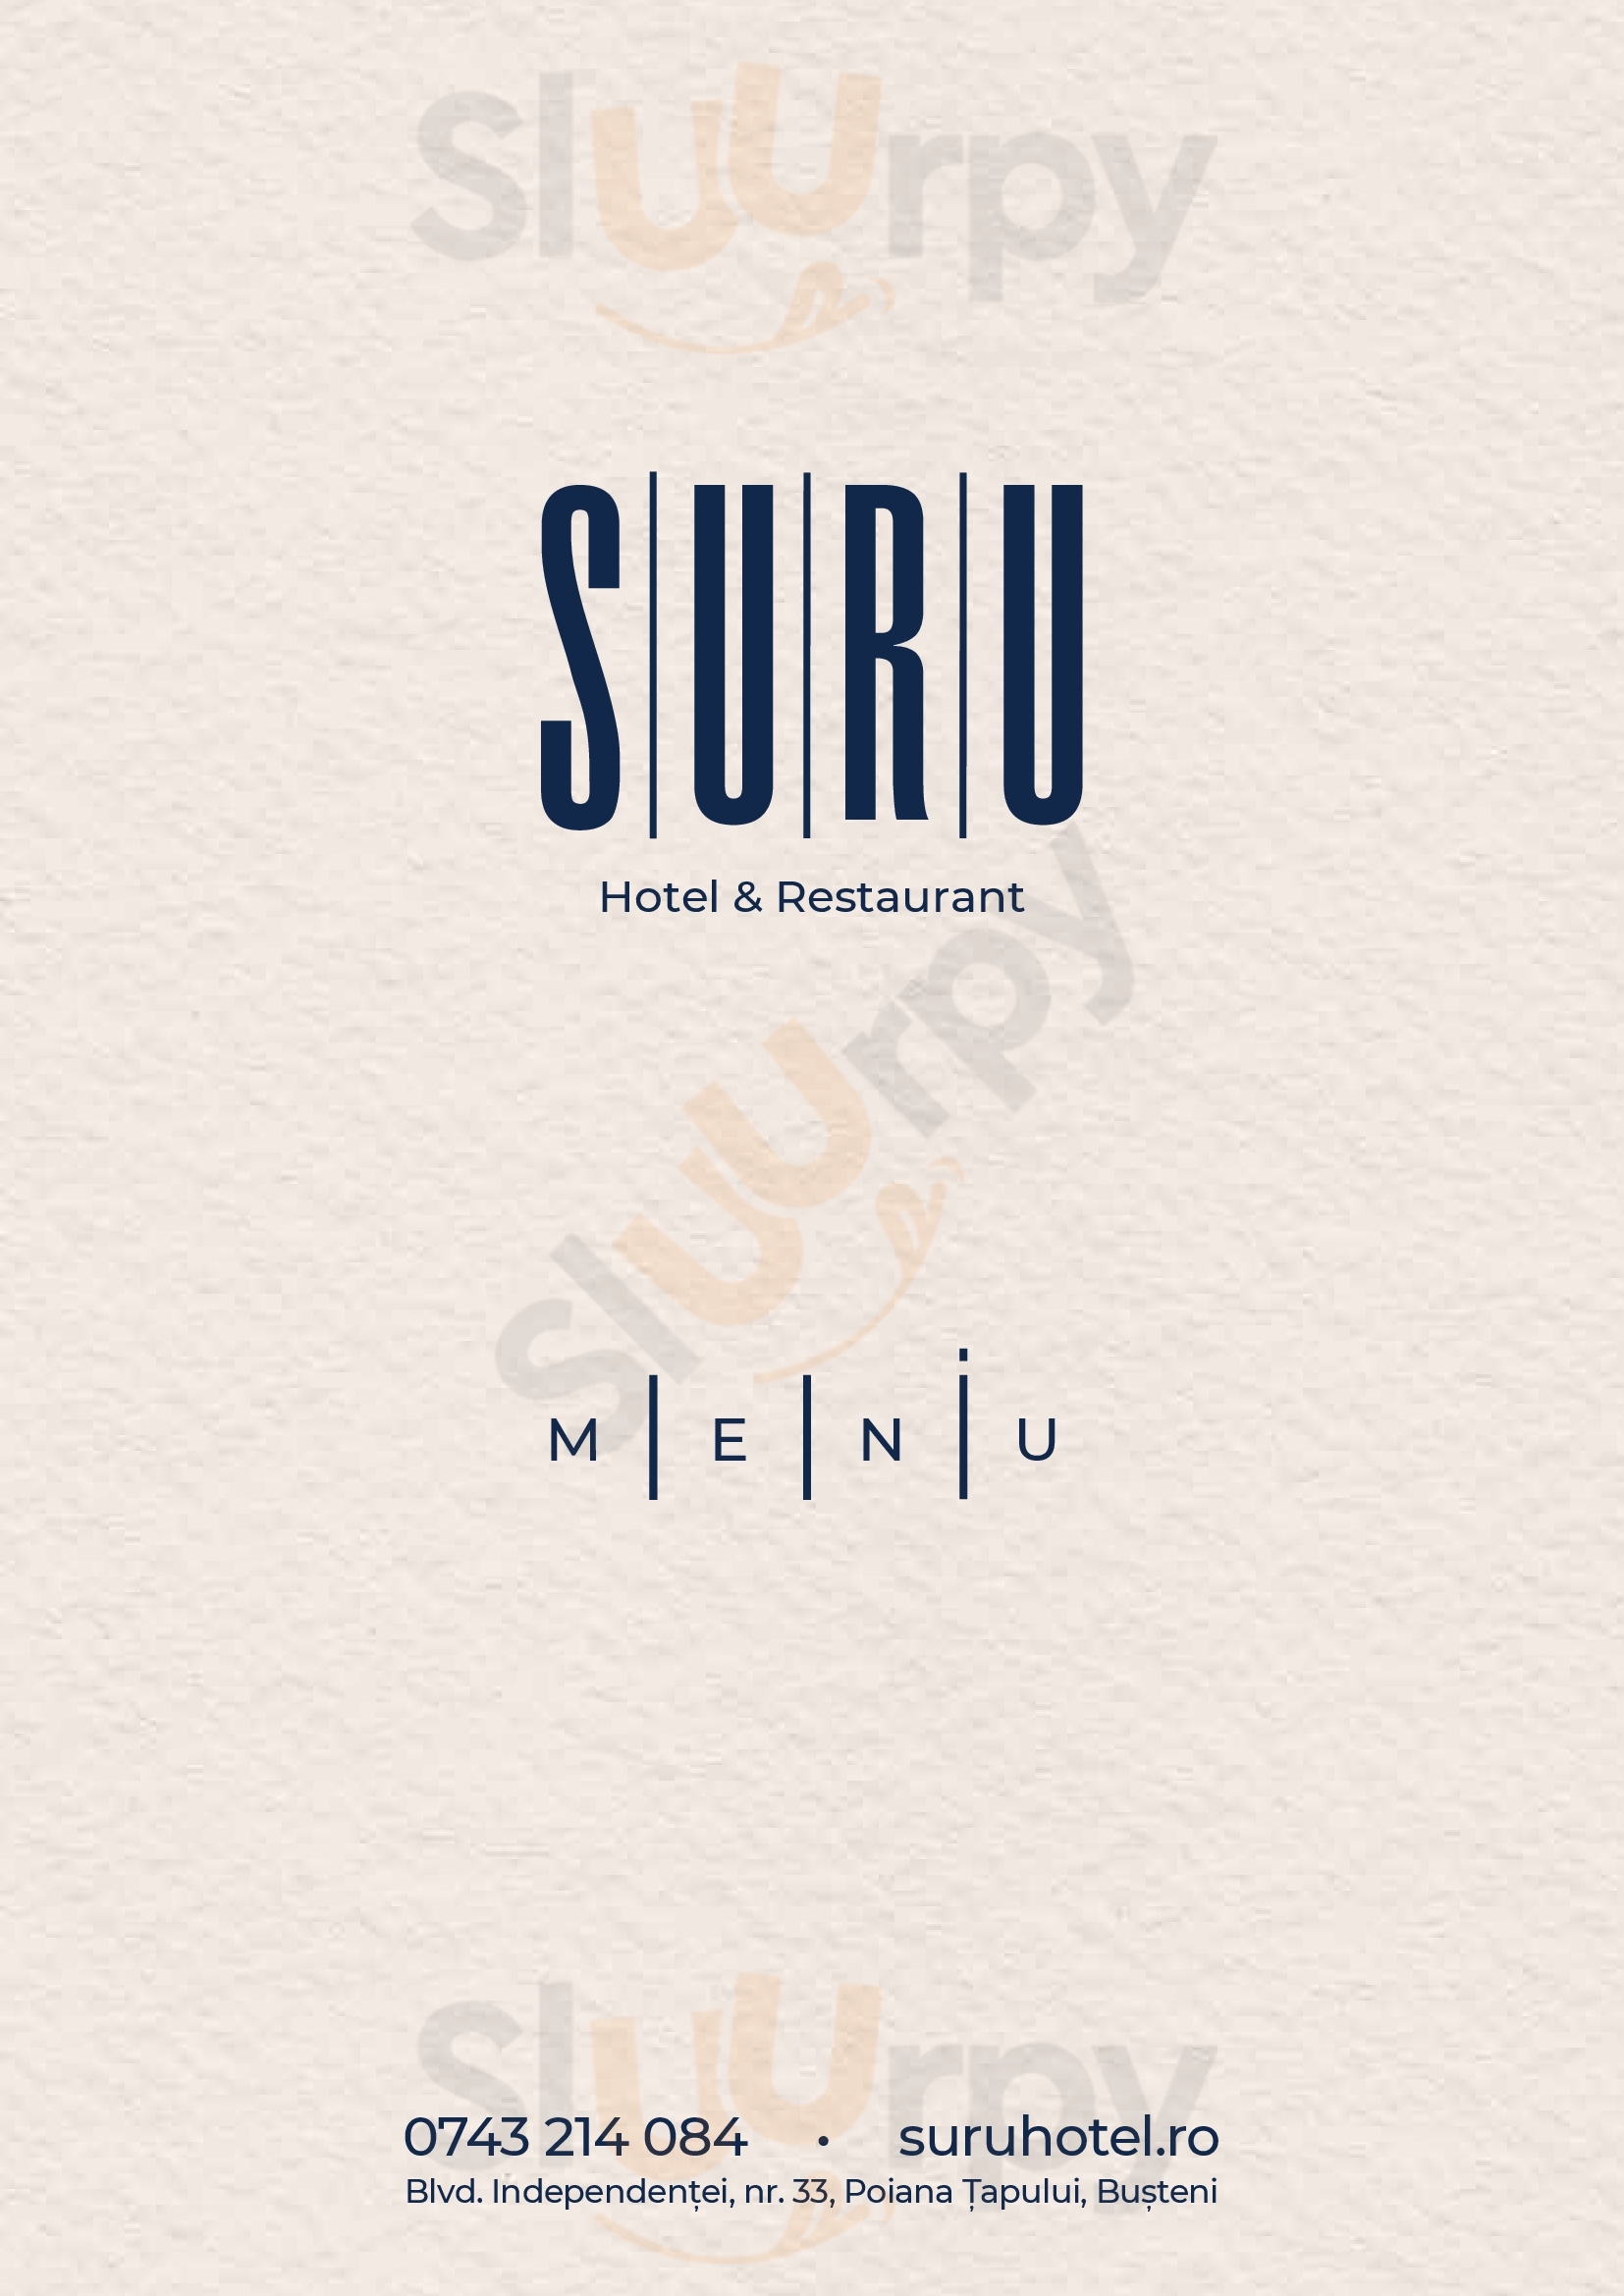 Suru Hotel & Restaurant Busteni Menu - 1